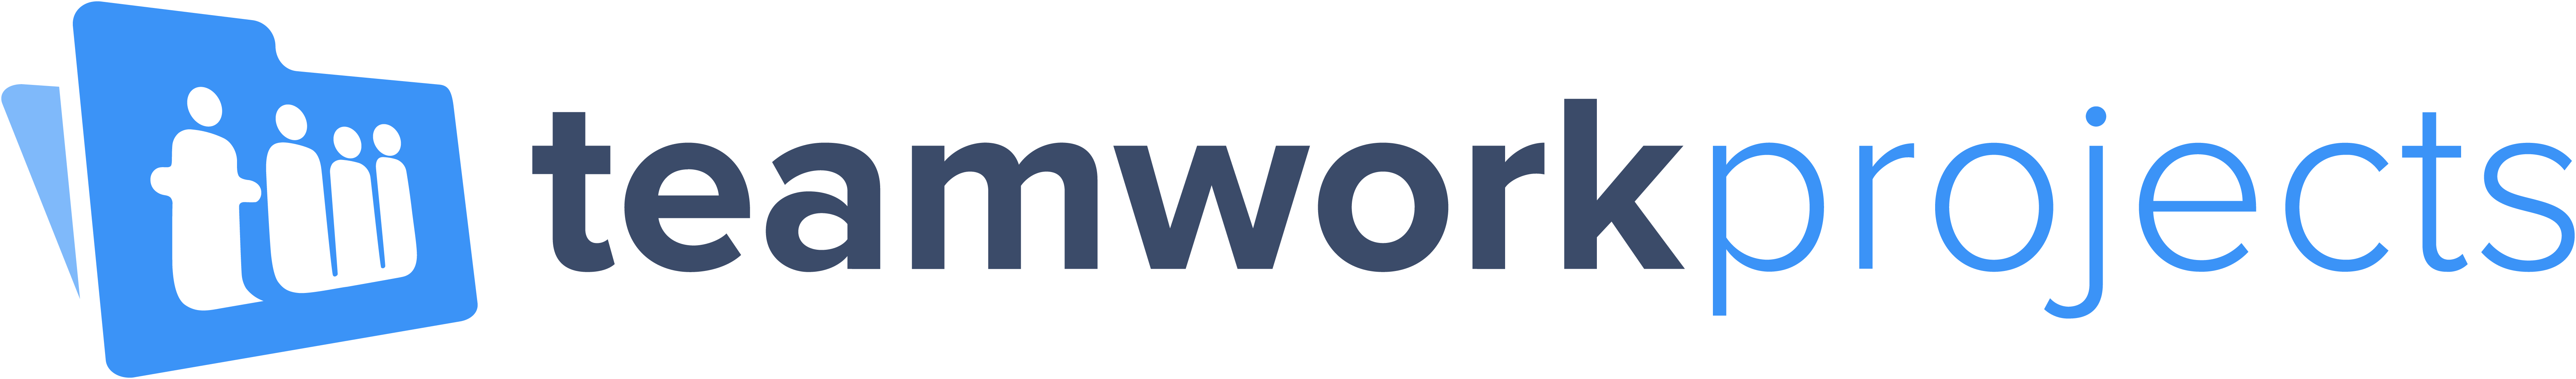 Teamwork Projects Logo (6793x1000)